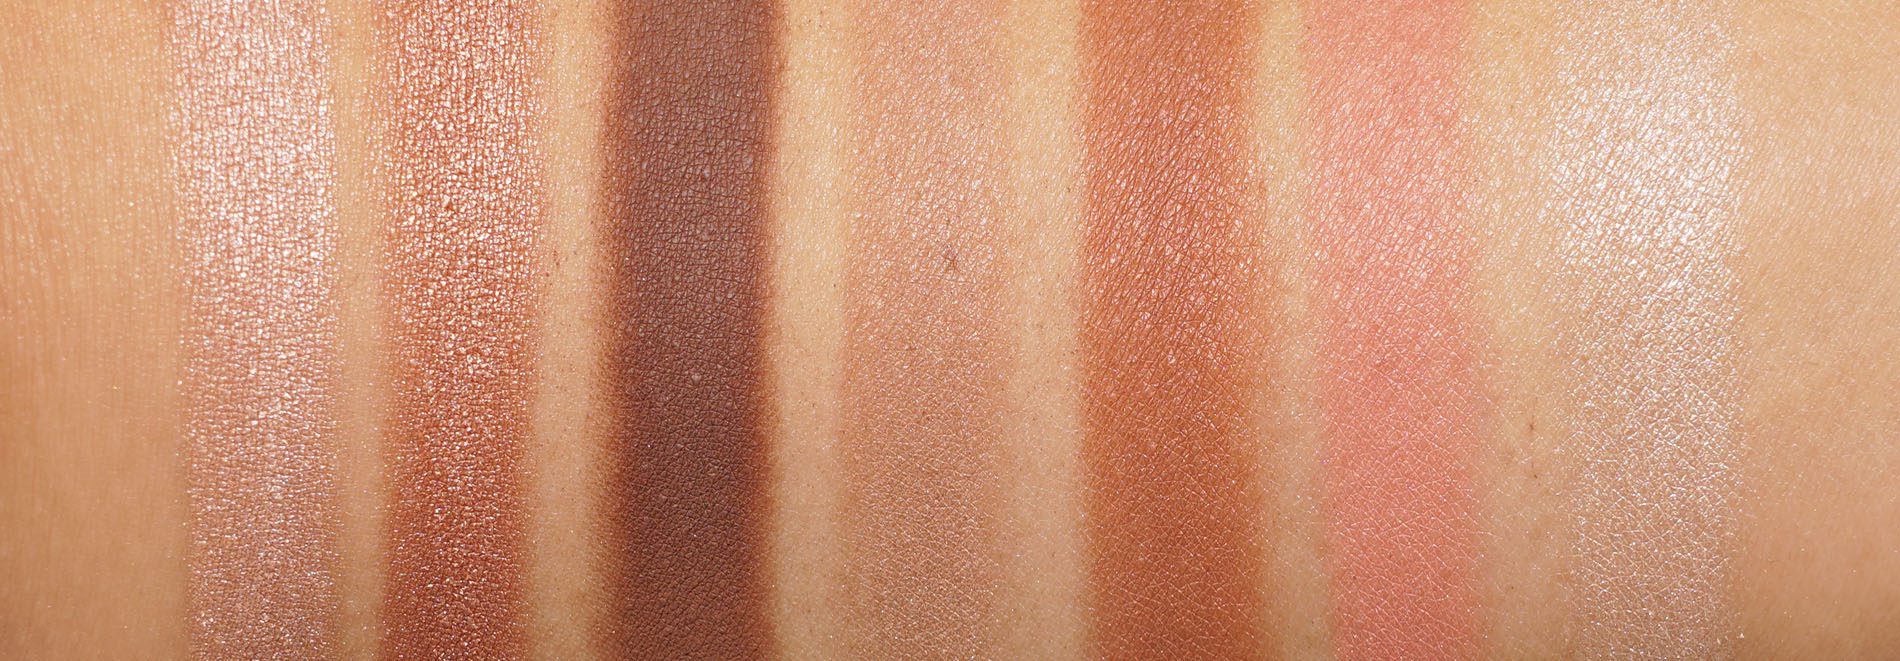 Christian Louboutin Velvet Matte Lipstick & Lip Definer DEMO + First  Impression 